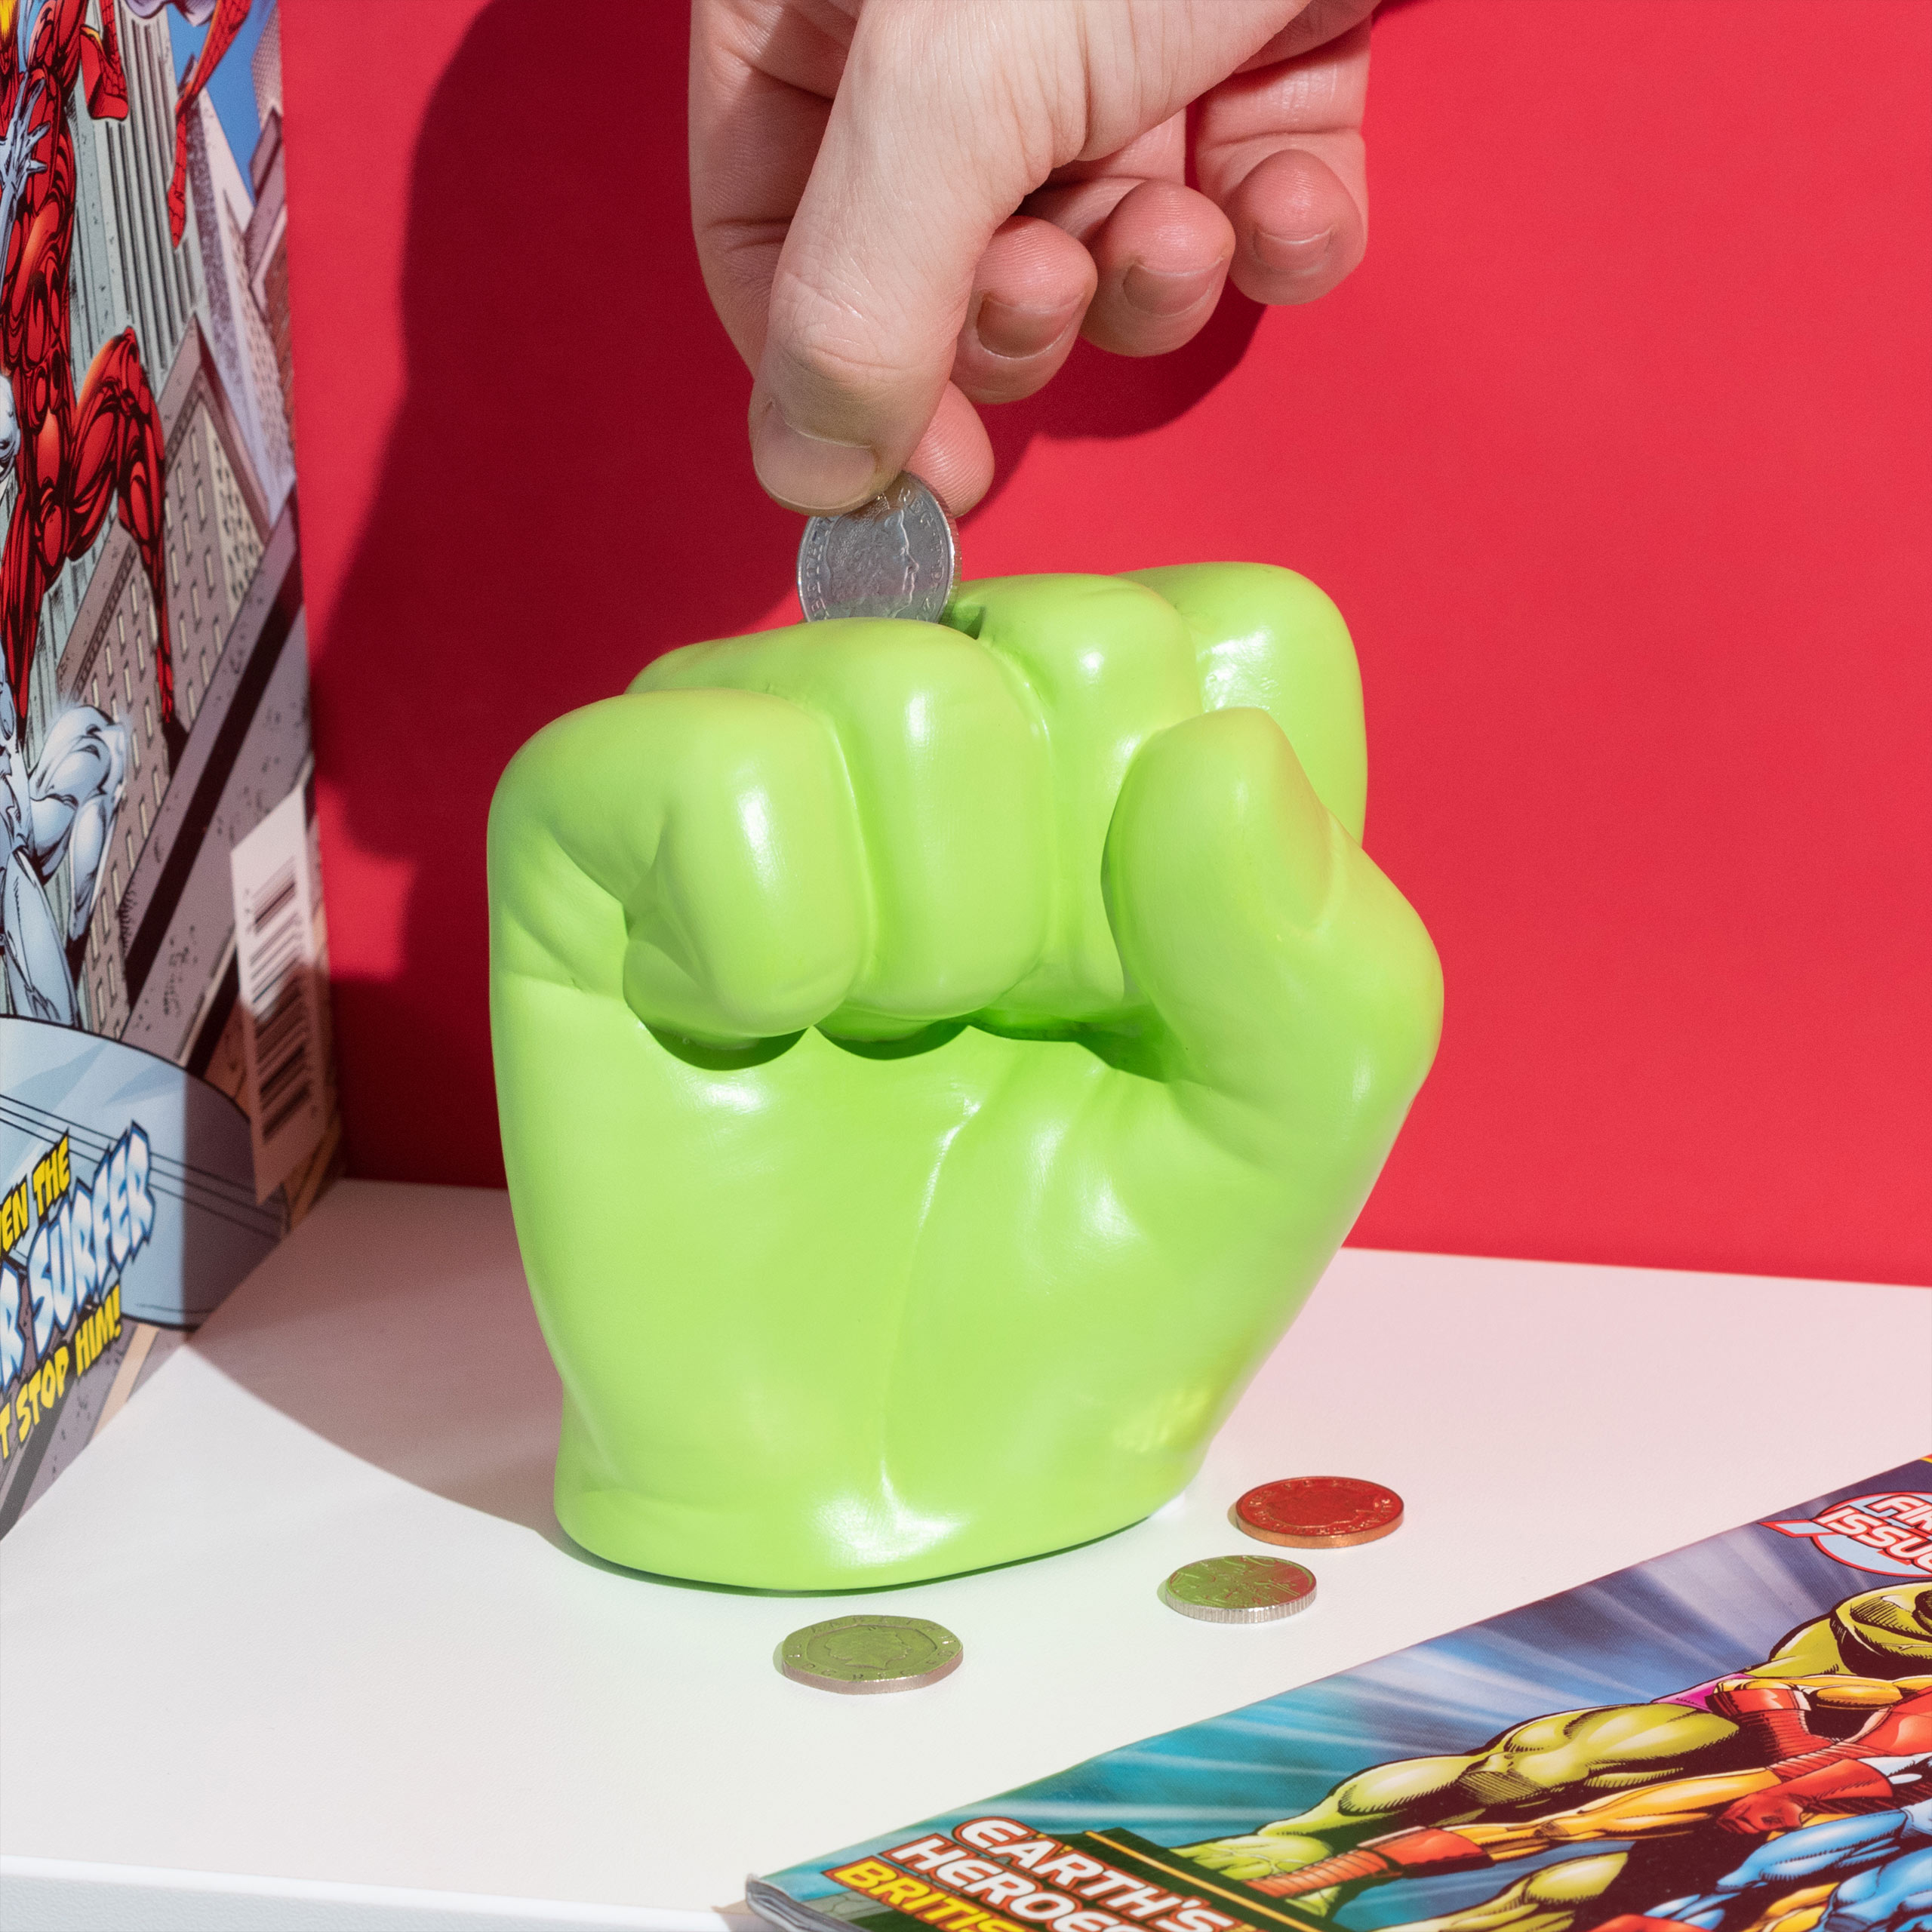 Hulk - Fist Money Box